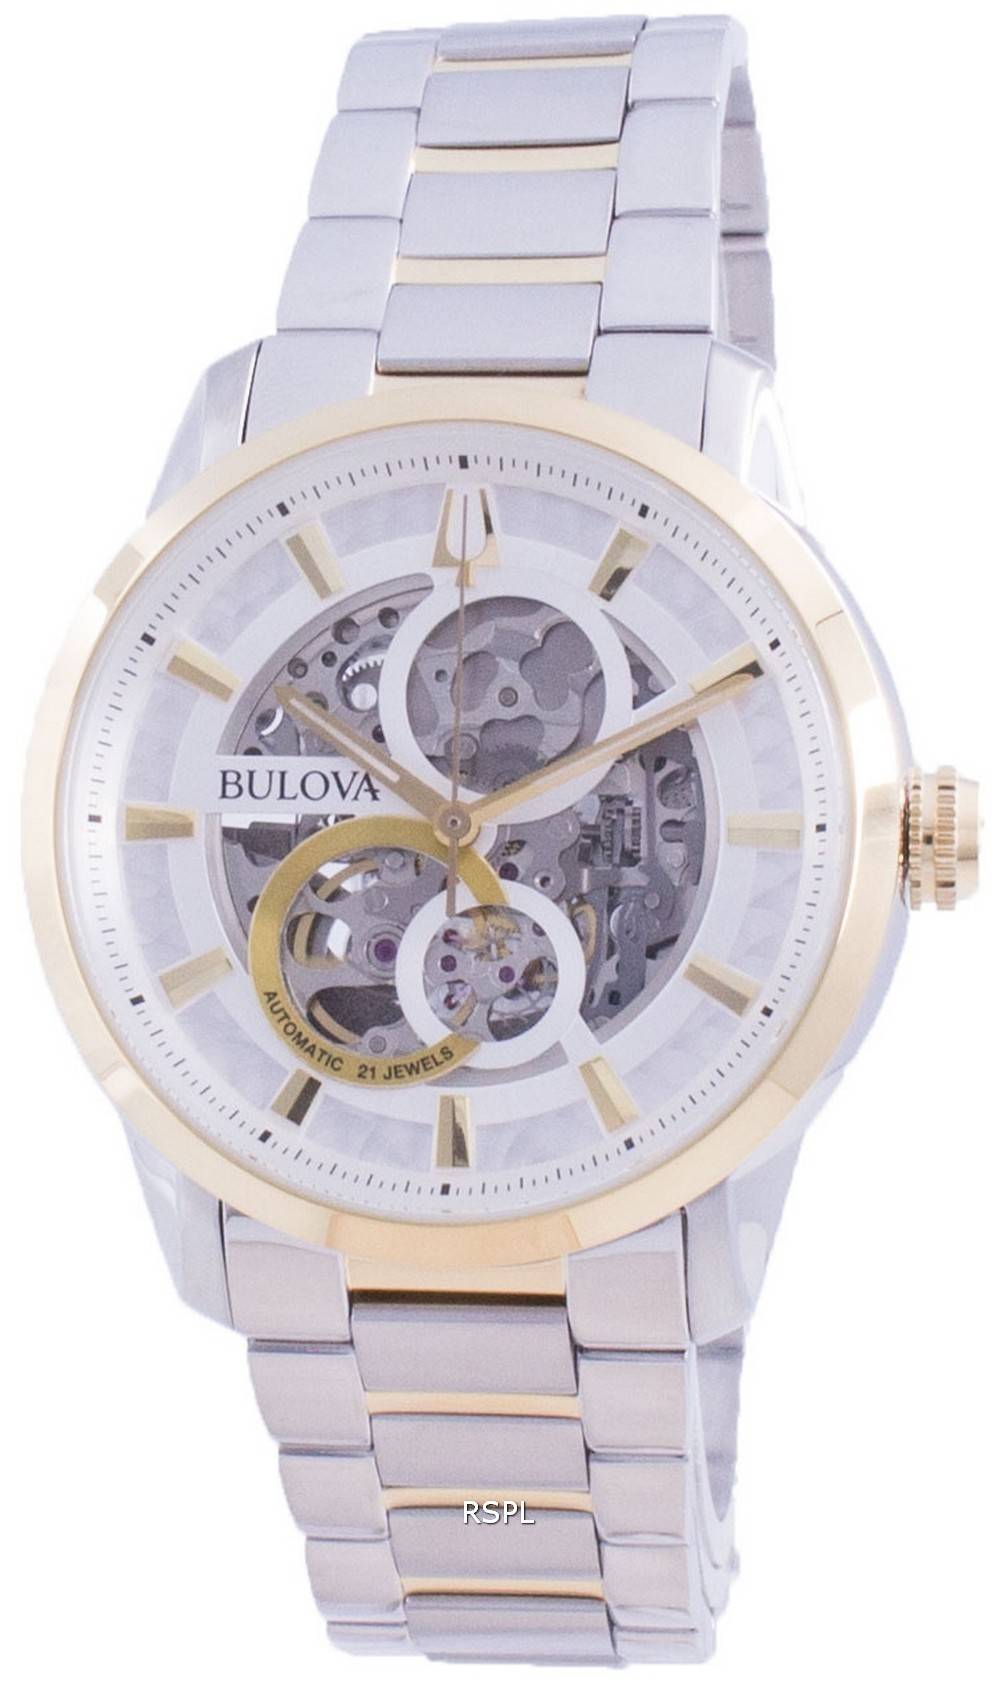 Bulova ブローバ 自動巻き腕時計 98A214モデル98A214 - 腕時計(アナログ)